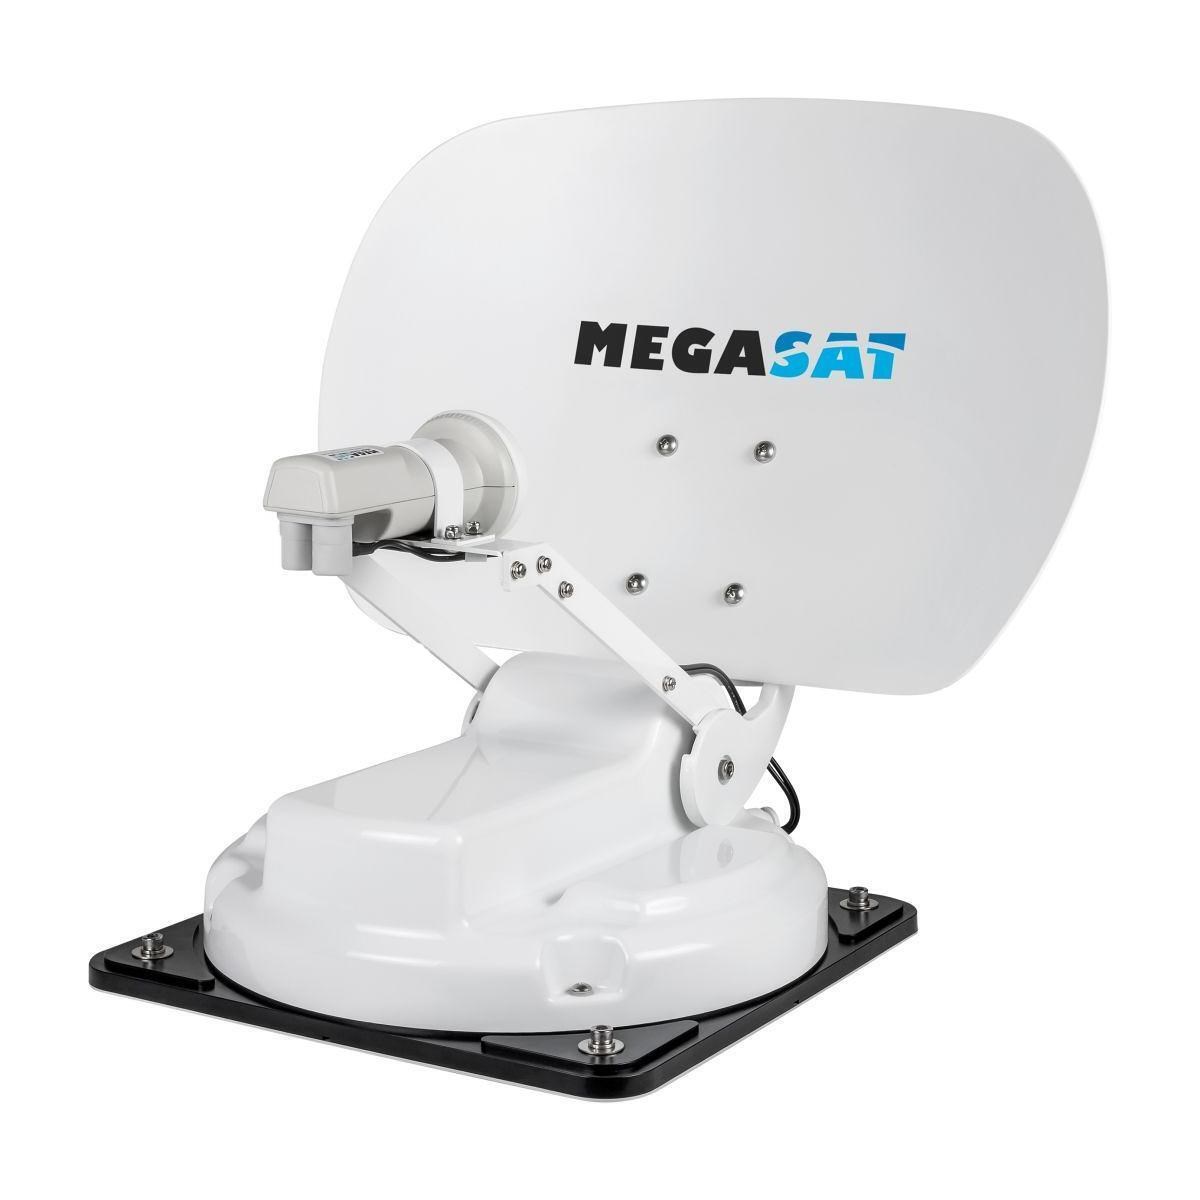 Megasat Satanlage Automatisch Caravanman Kompakt 3 TWIN Version